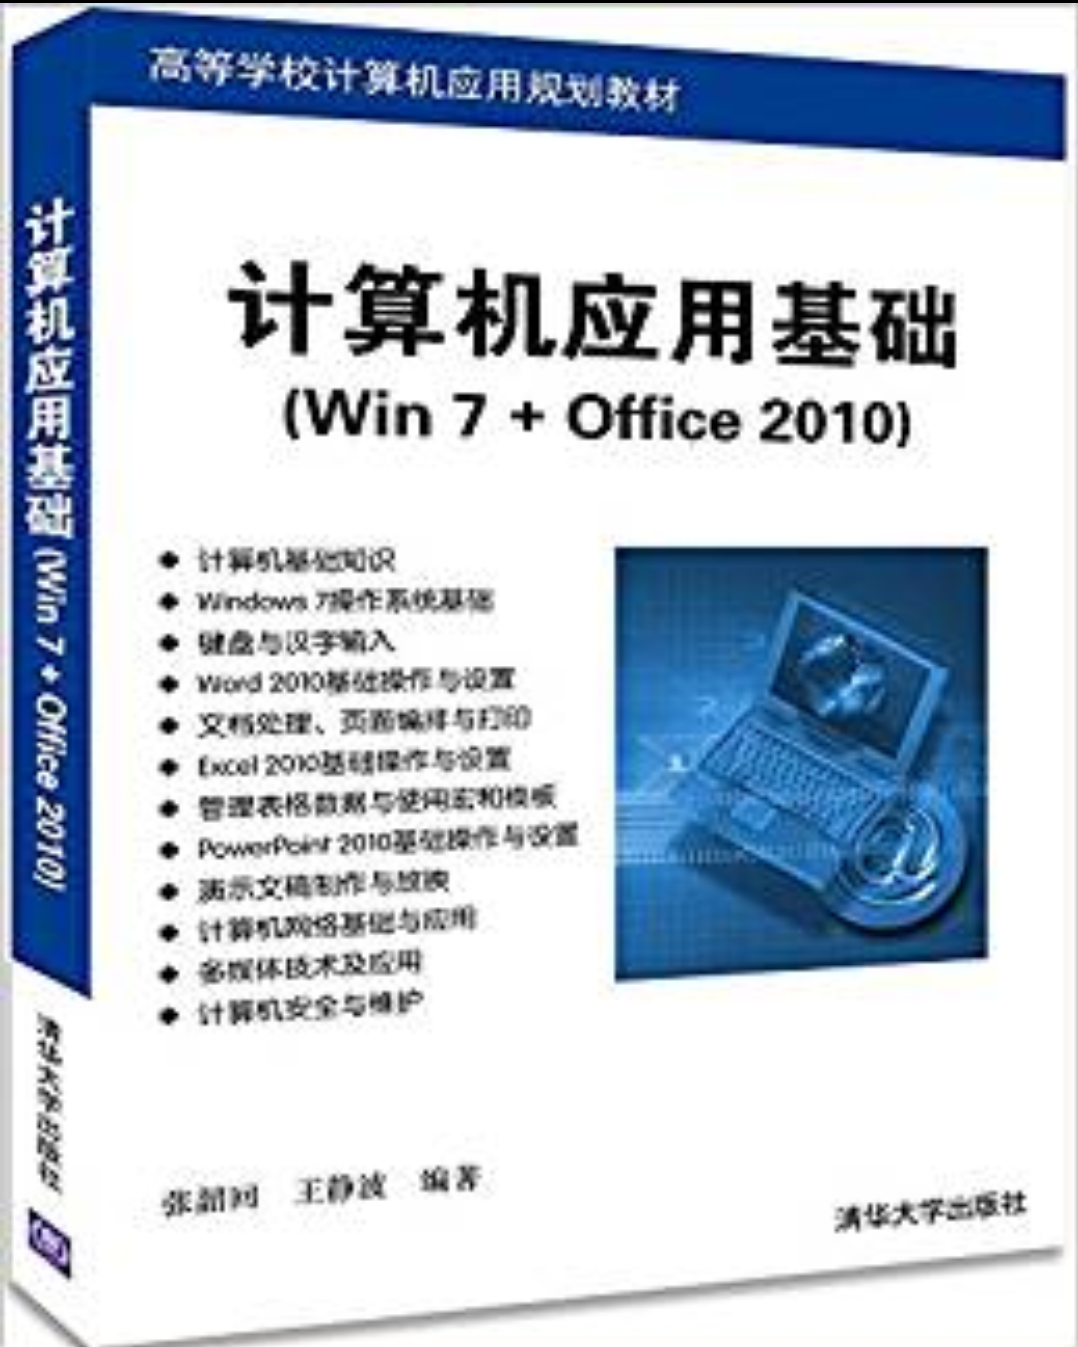 計算機套用基礎(Win 7+Office 2010)